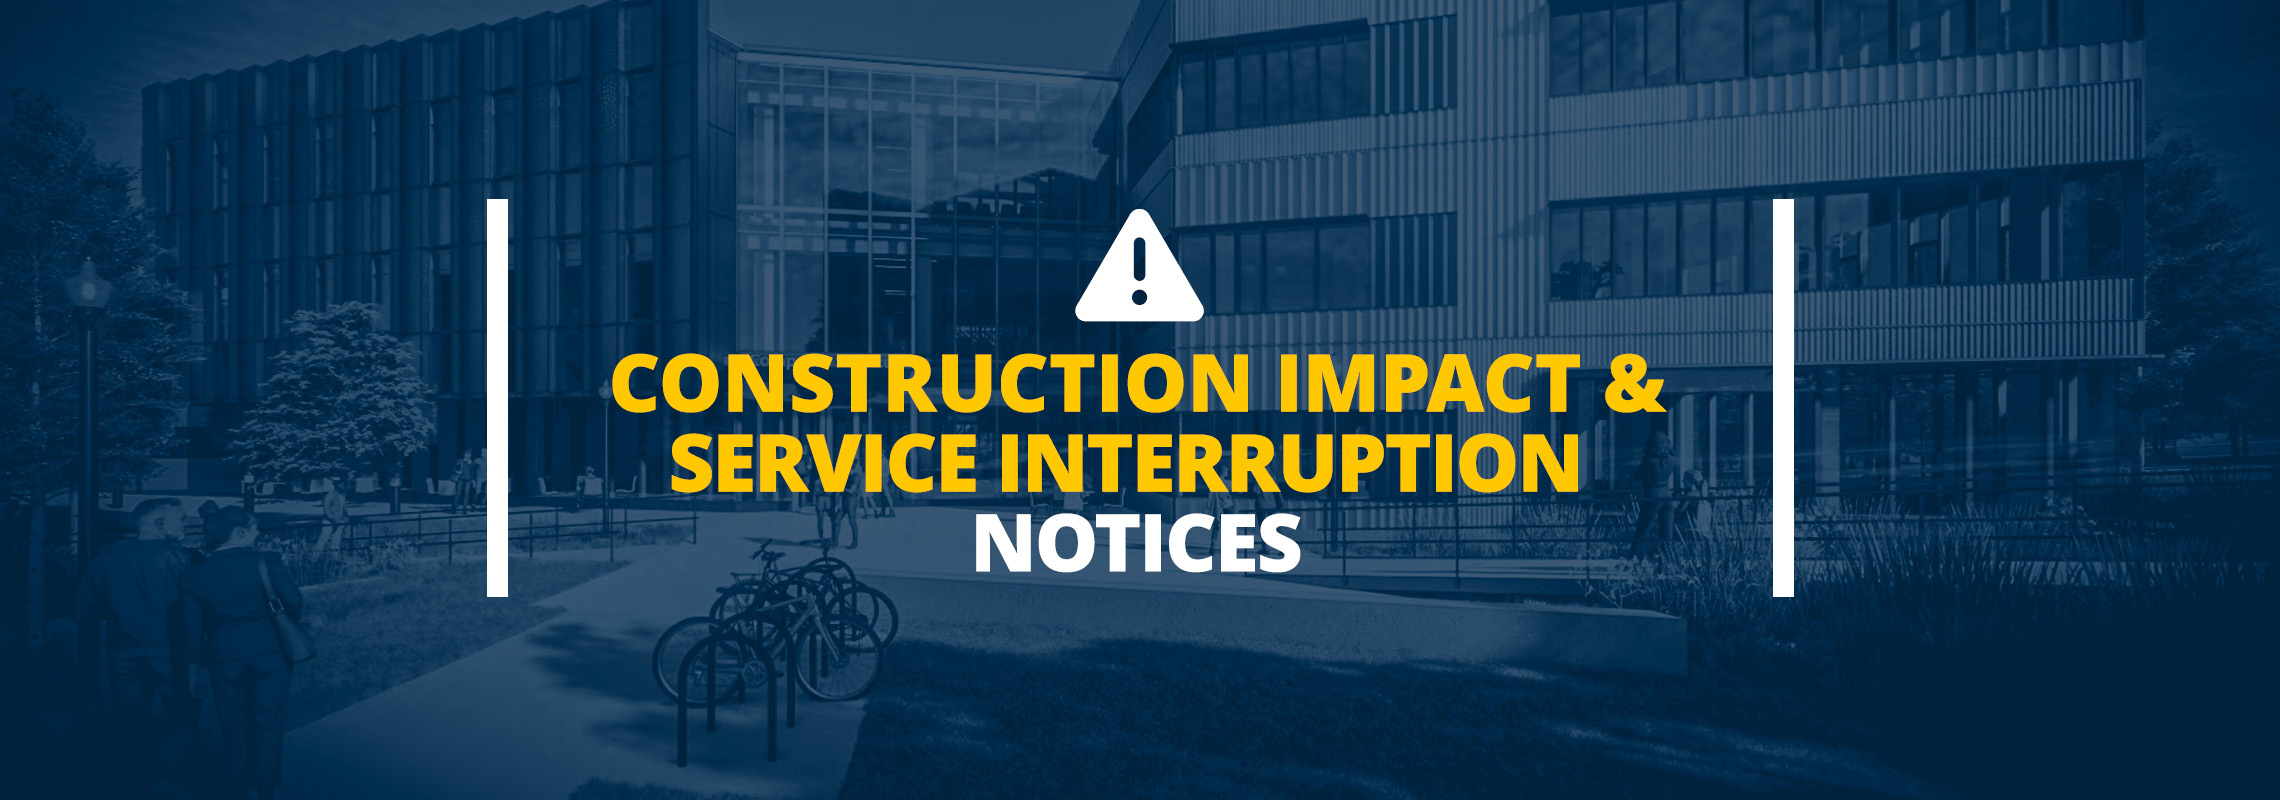 CONSTRUCTION IMPACT &SERVICE INTERRUPTION NOTICES